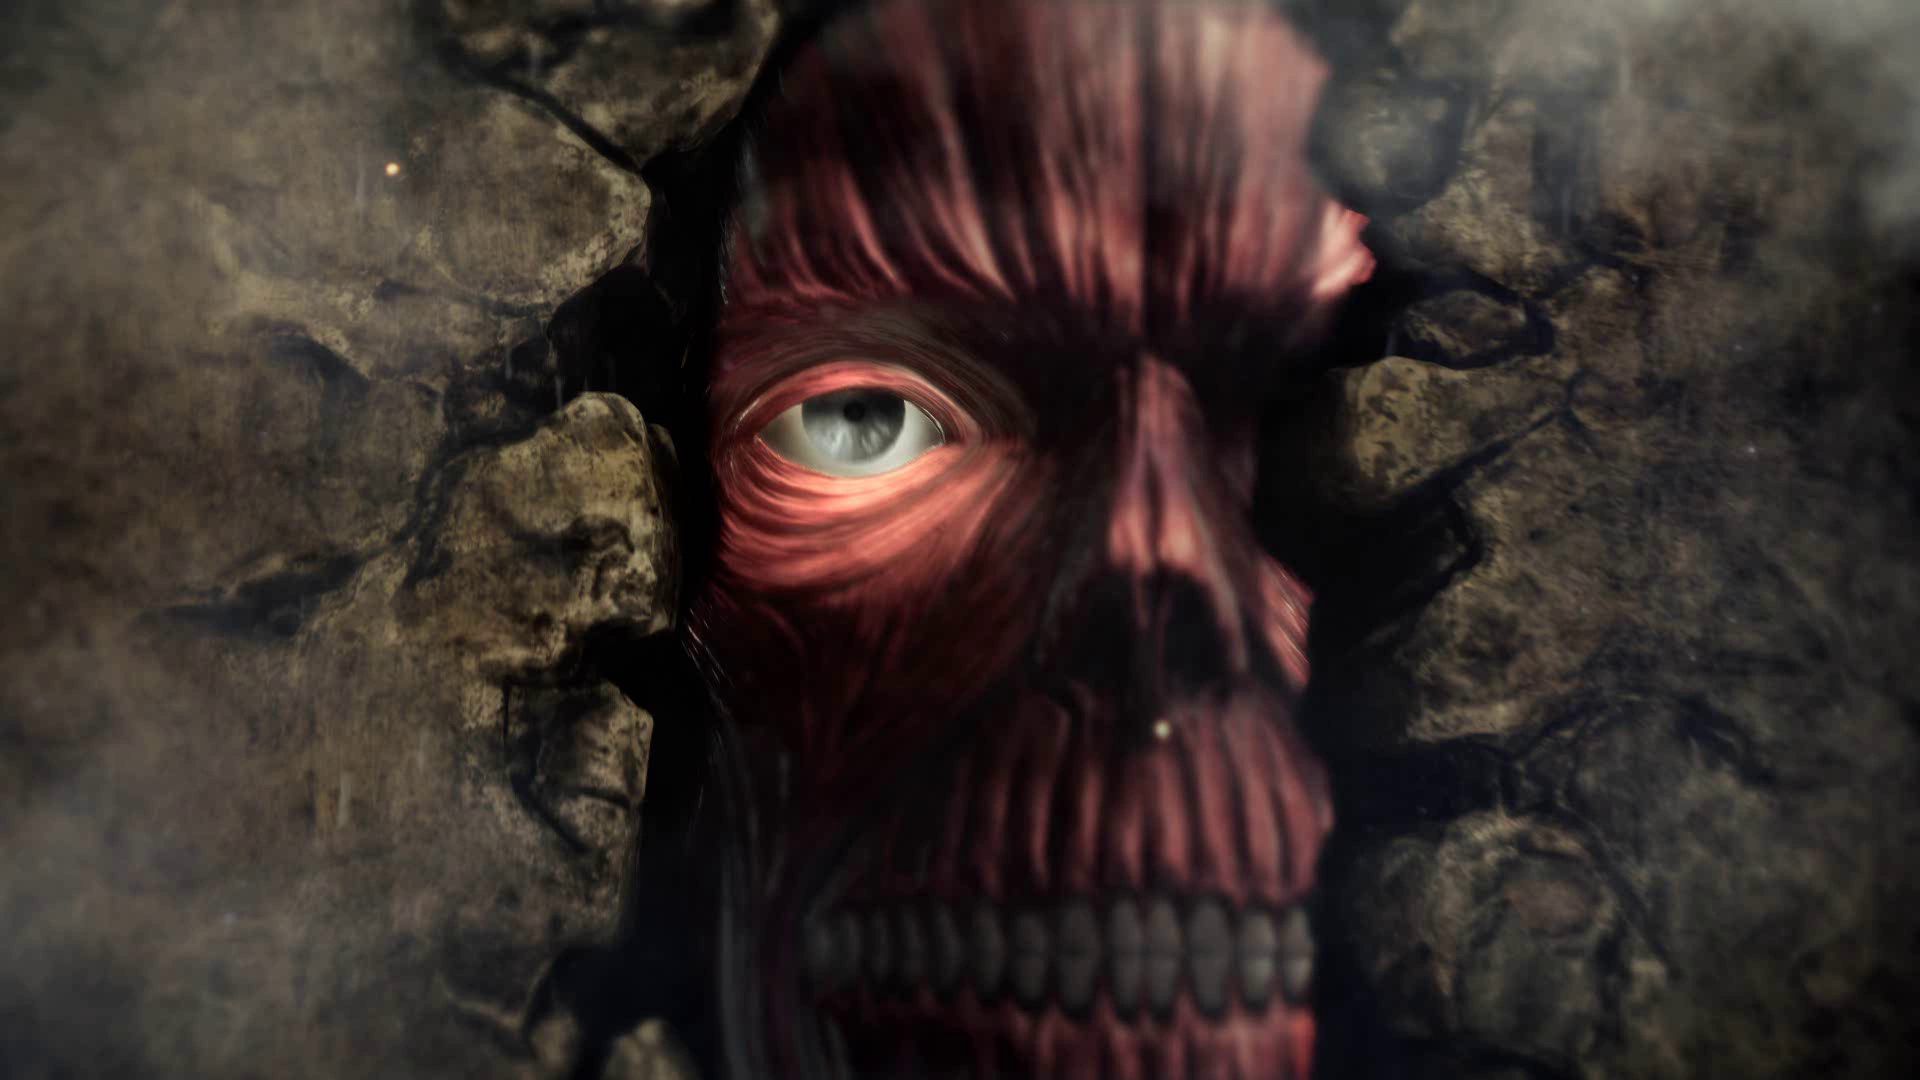 Attack on Titan 2: Официальный трейлер